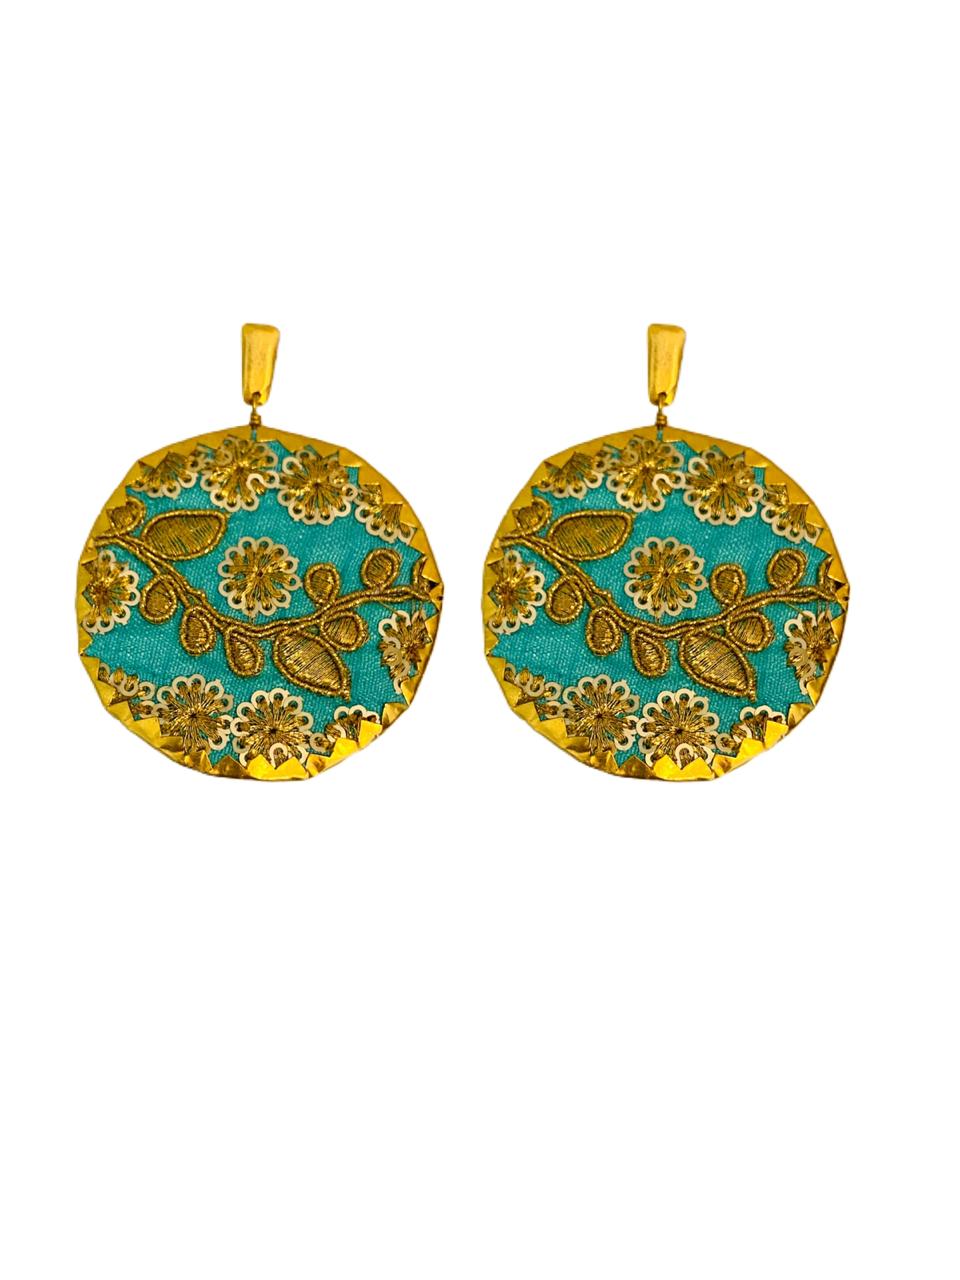 Nounzein Brocart Round Earrings - Turquoise